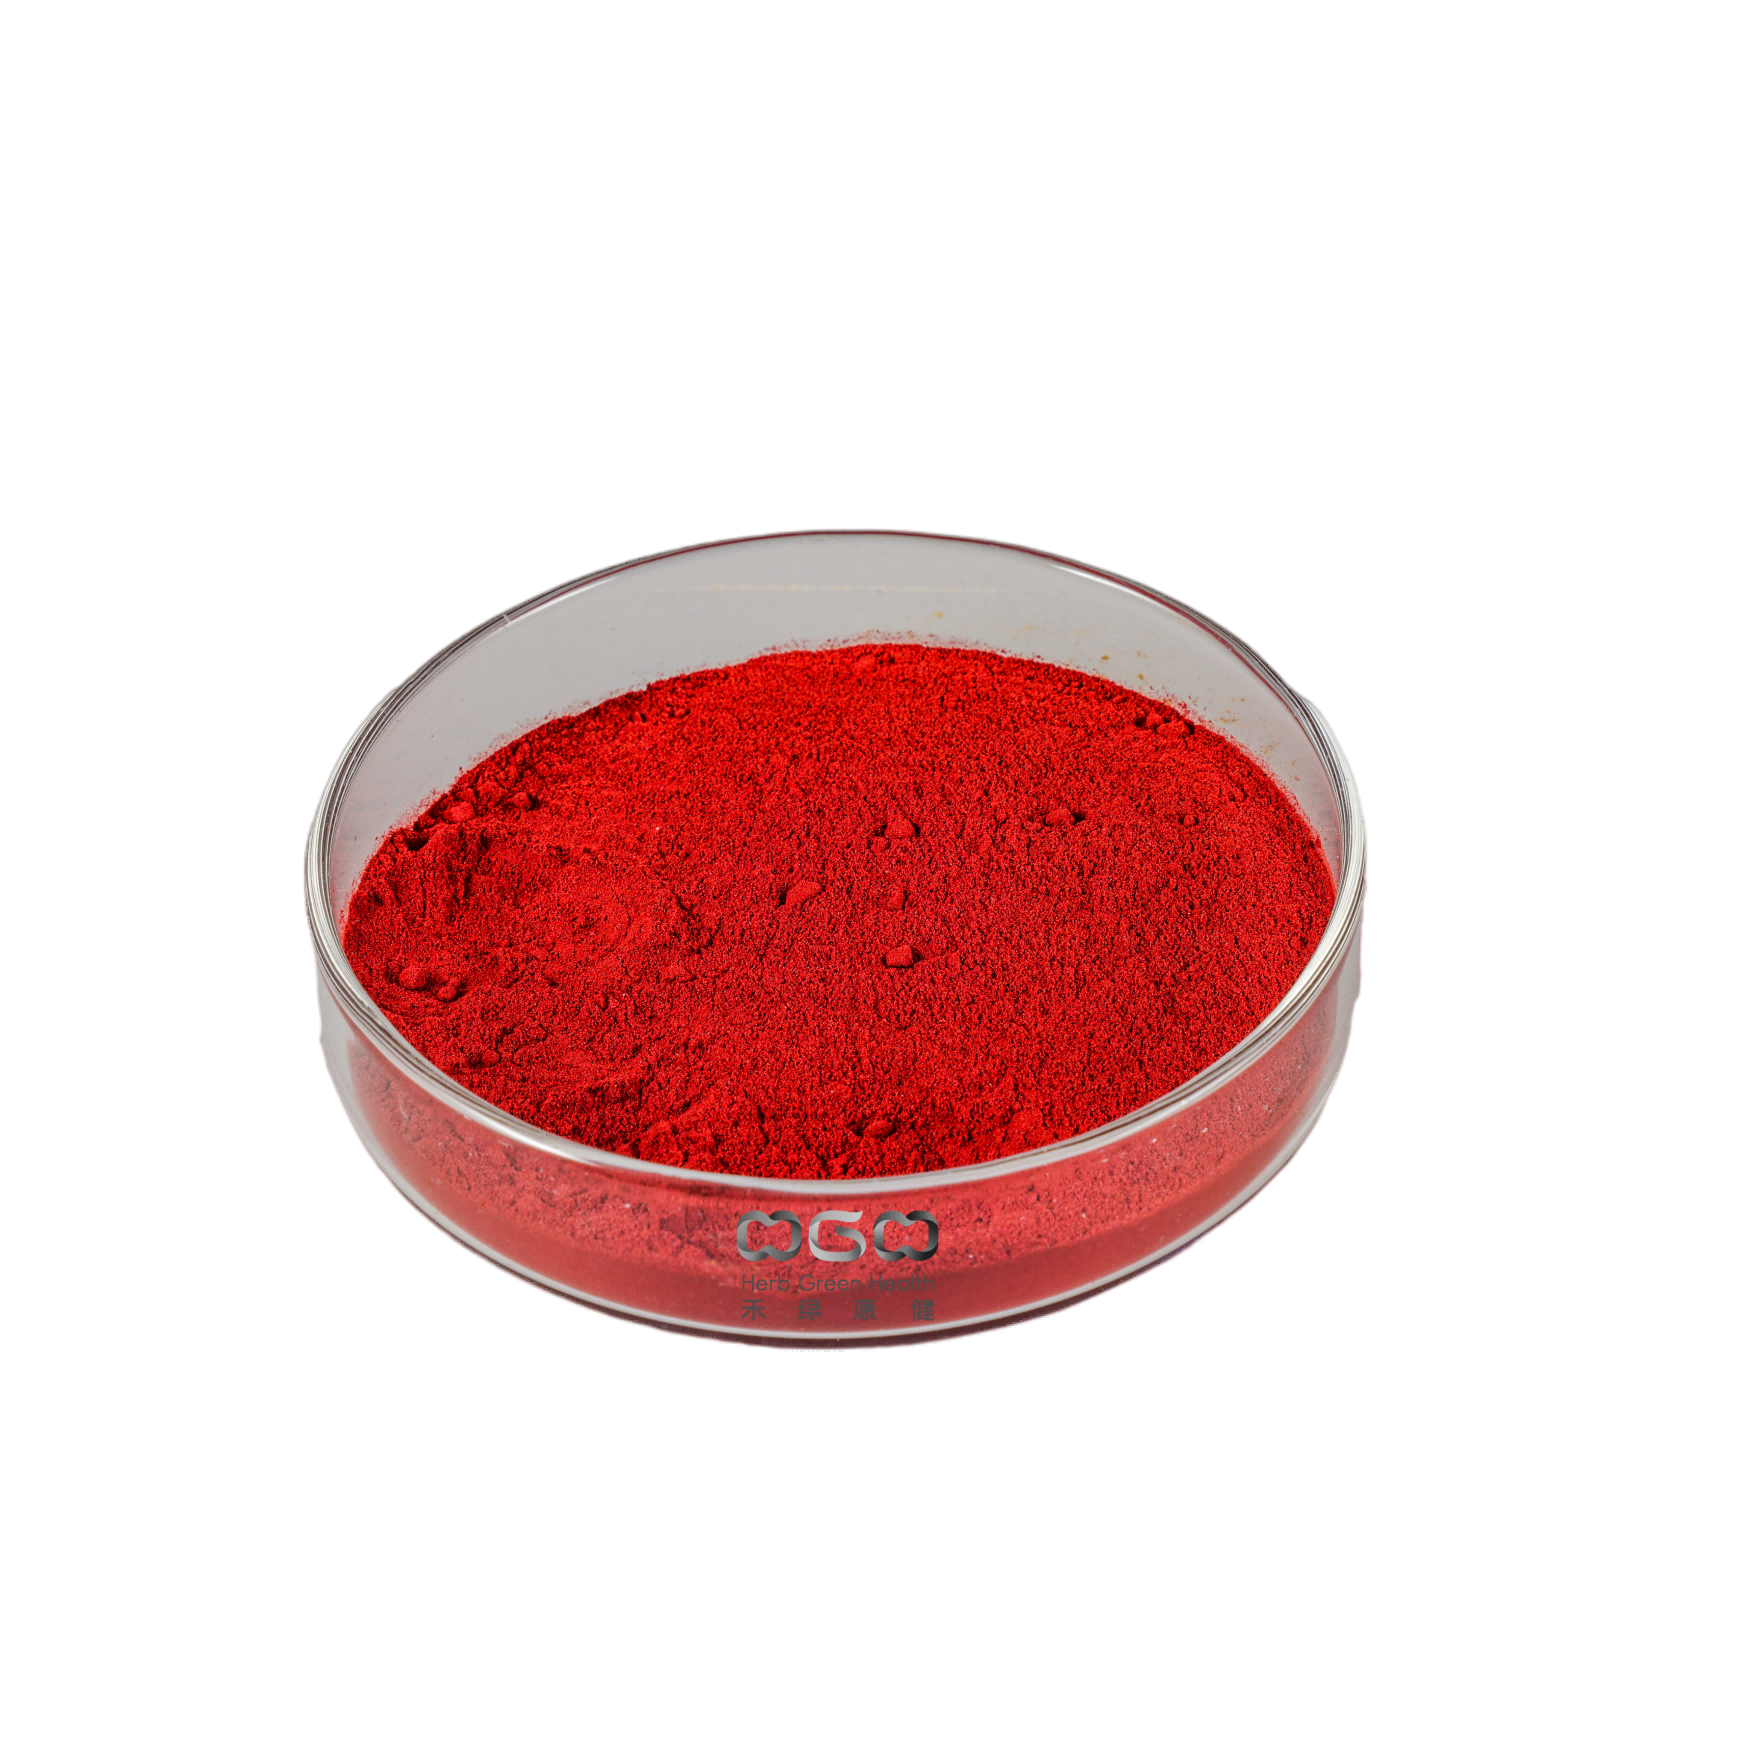 Food Additive Improve Appetite Red Chili Fruit Powder